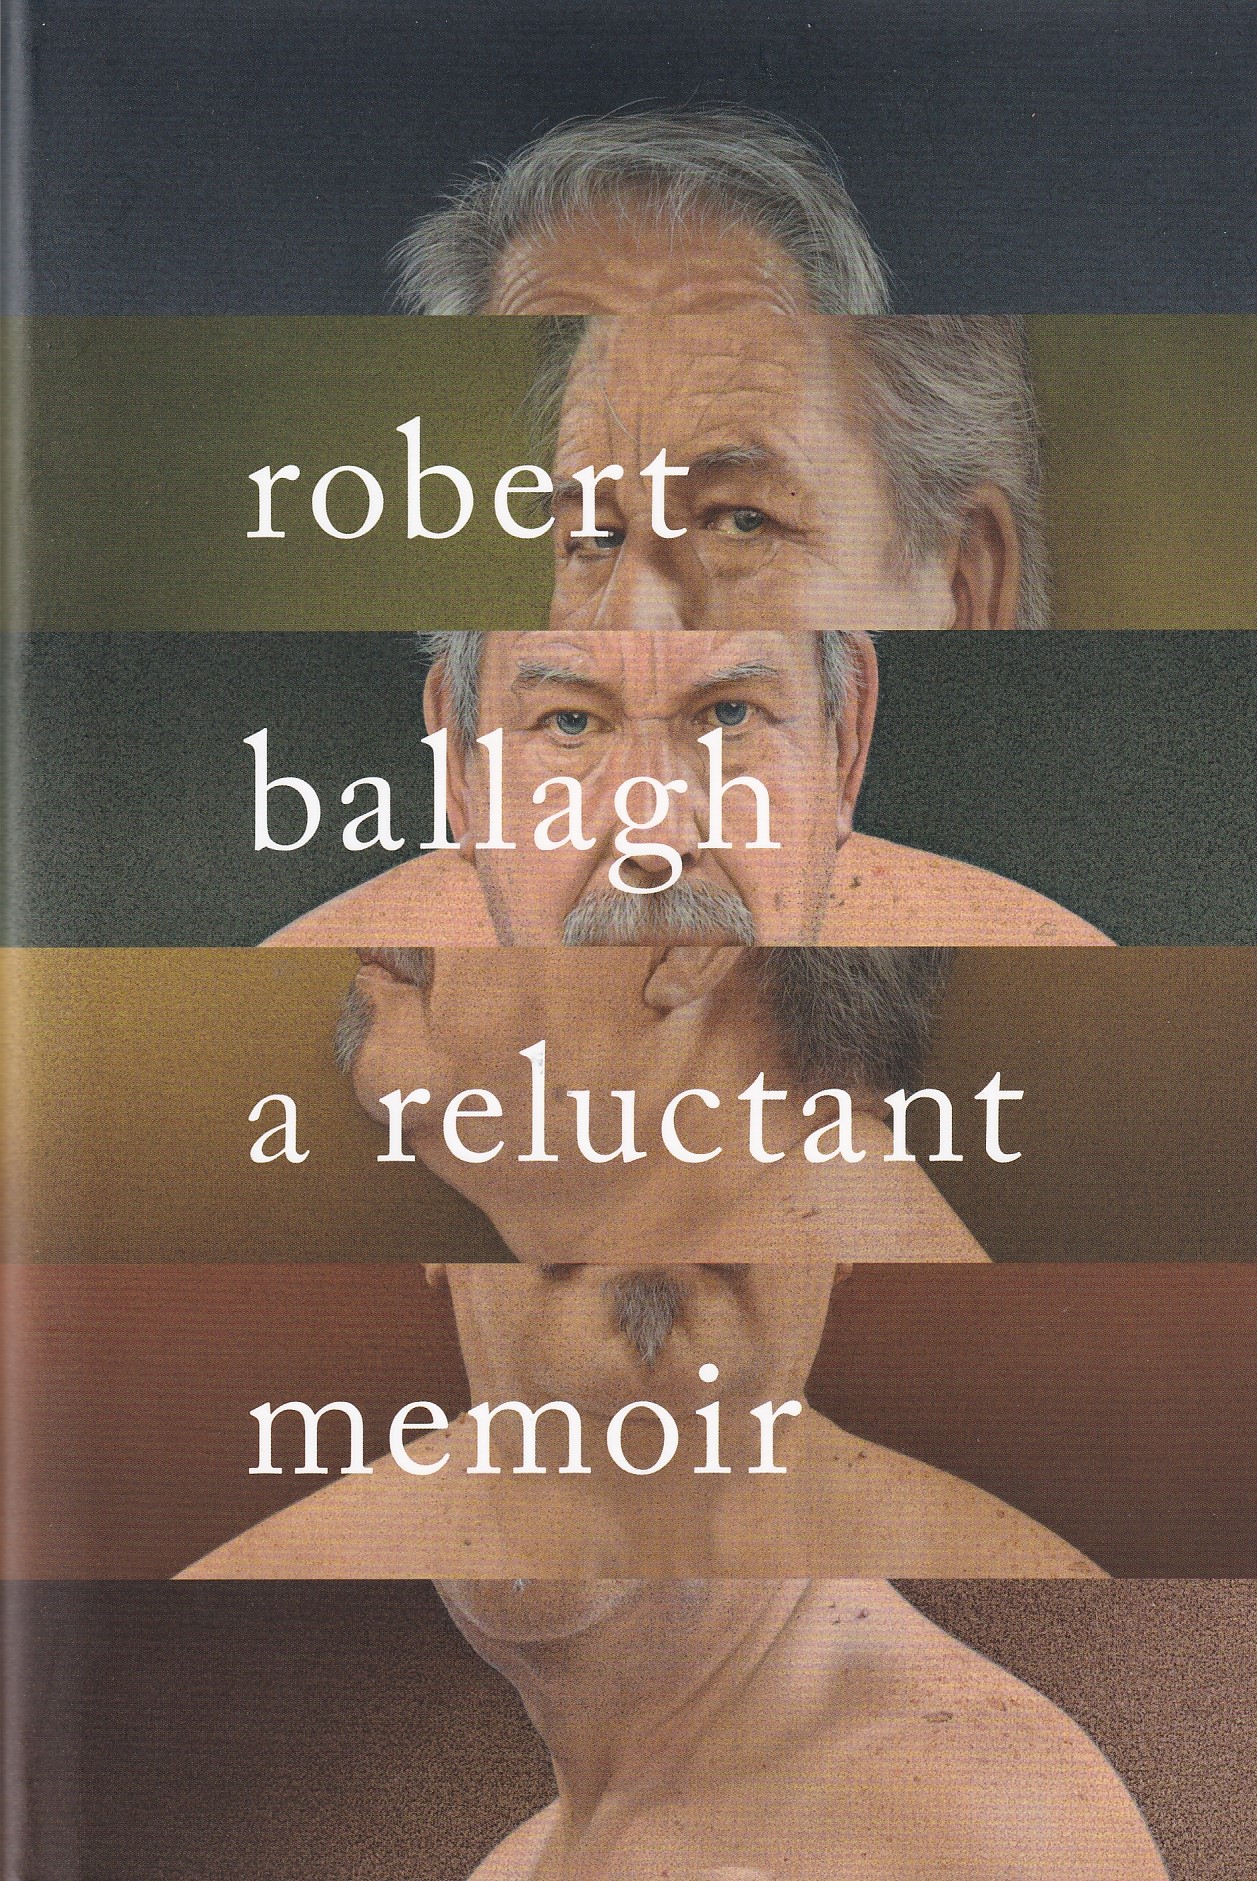 A Reluctant Memoir | Robert Ballagh | Charlie Byrne's